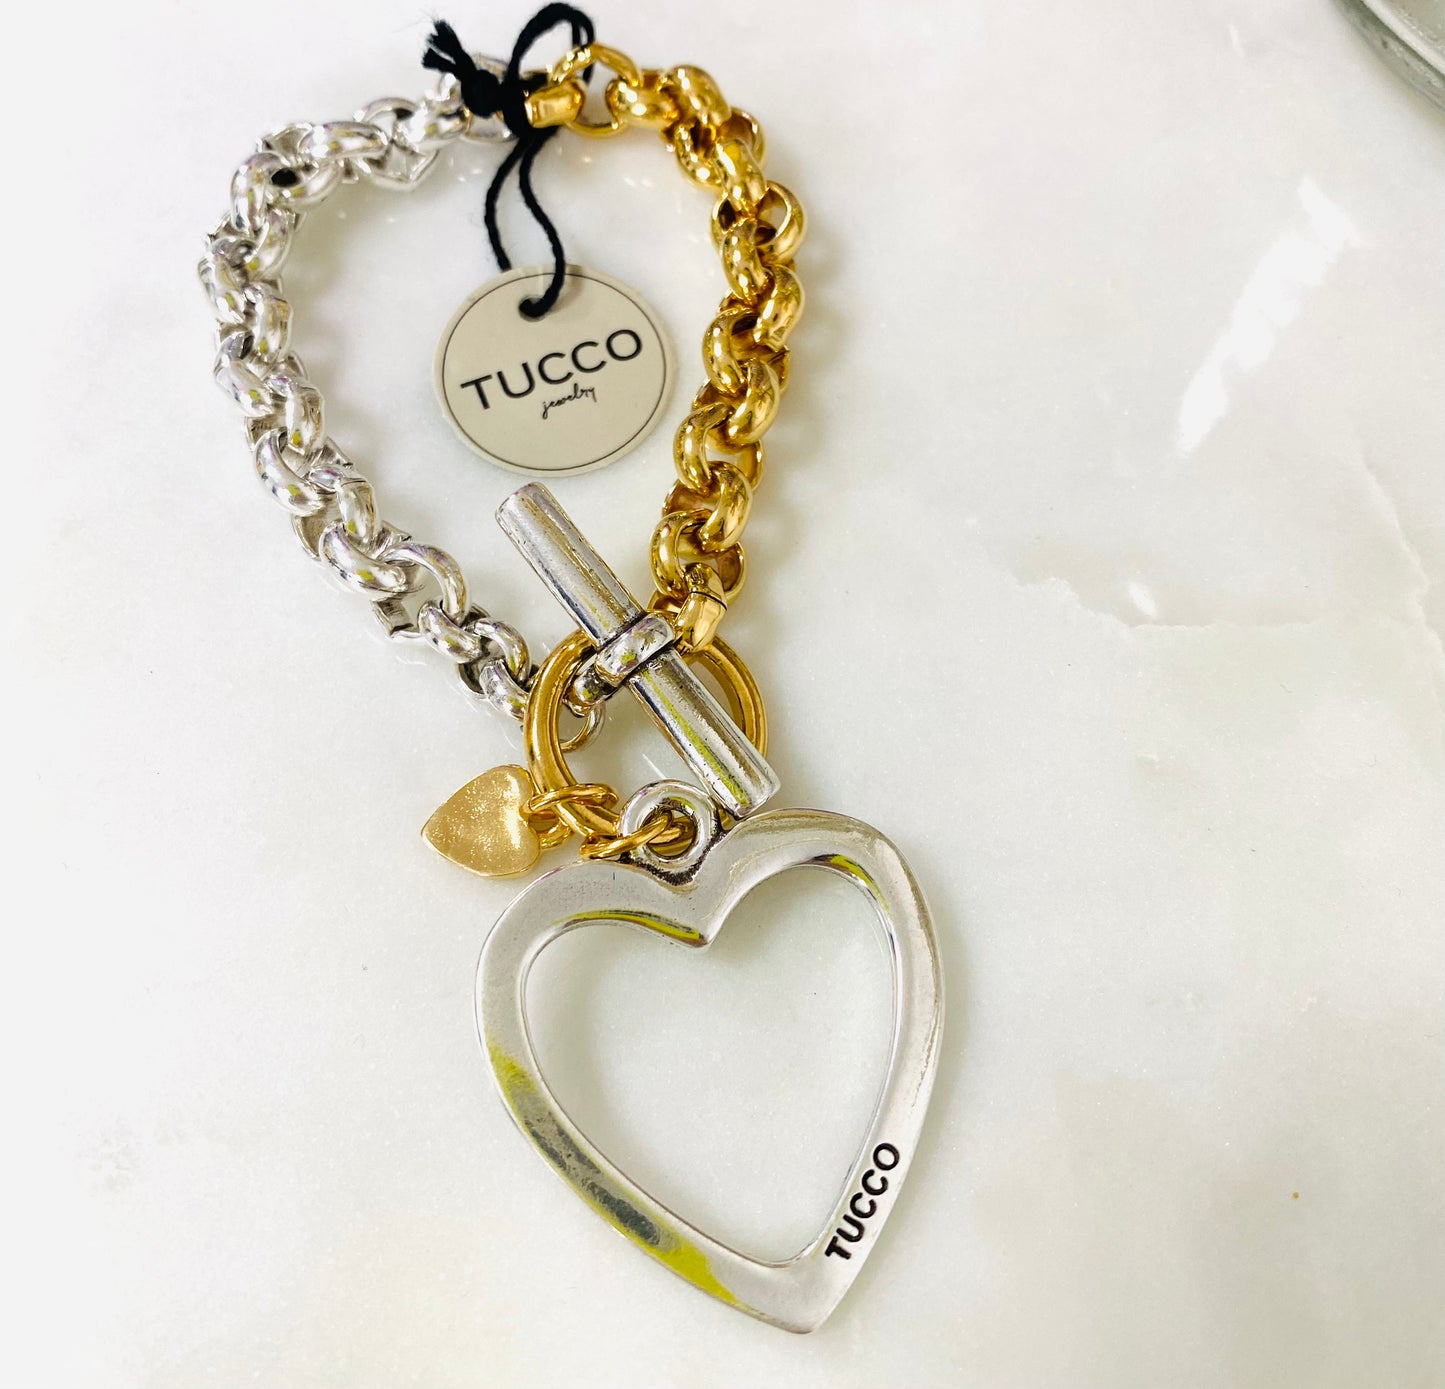 Tucco Gold/Silver Heart Bracelet